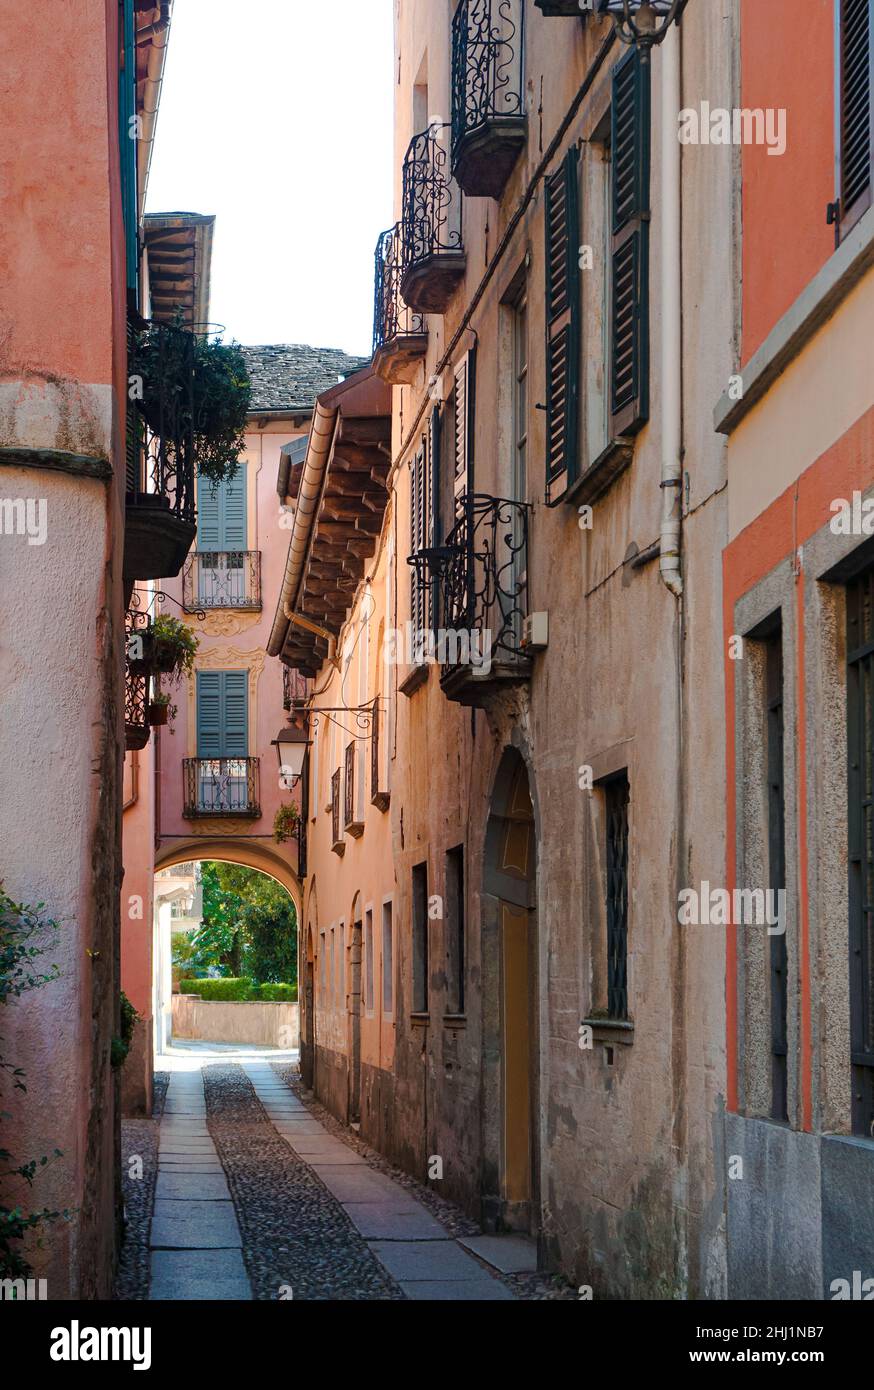 A narrow, romantic street in the Italian countryside Stock Photo